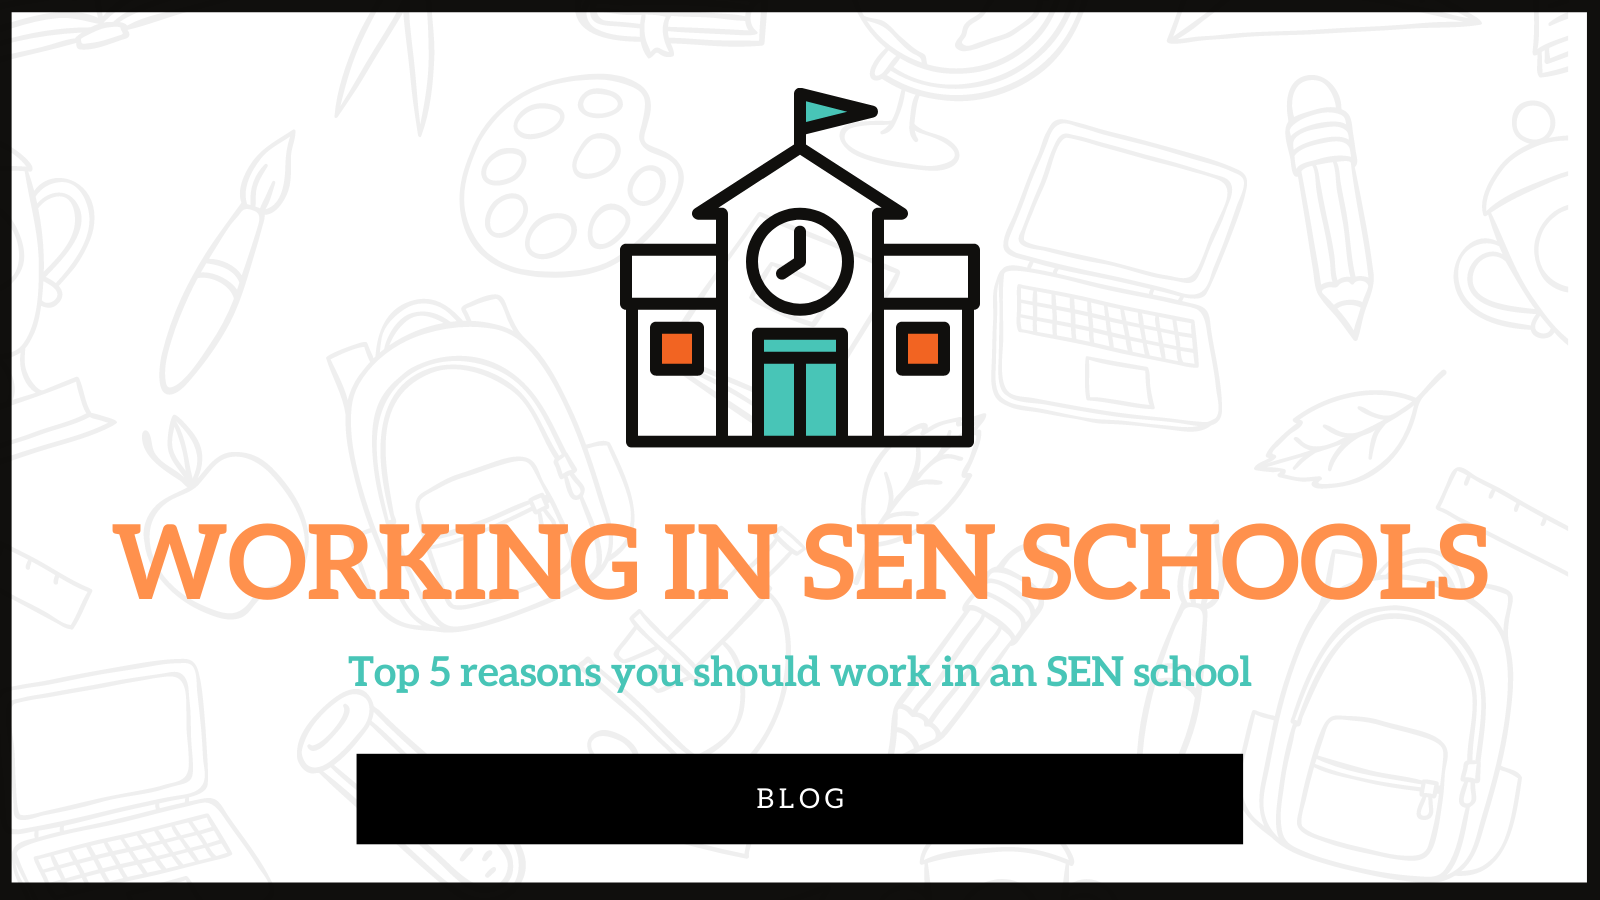 Top 5 Reasons to Work in a SEN School